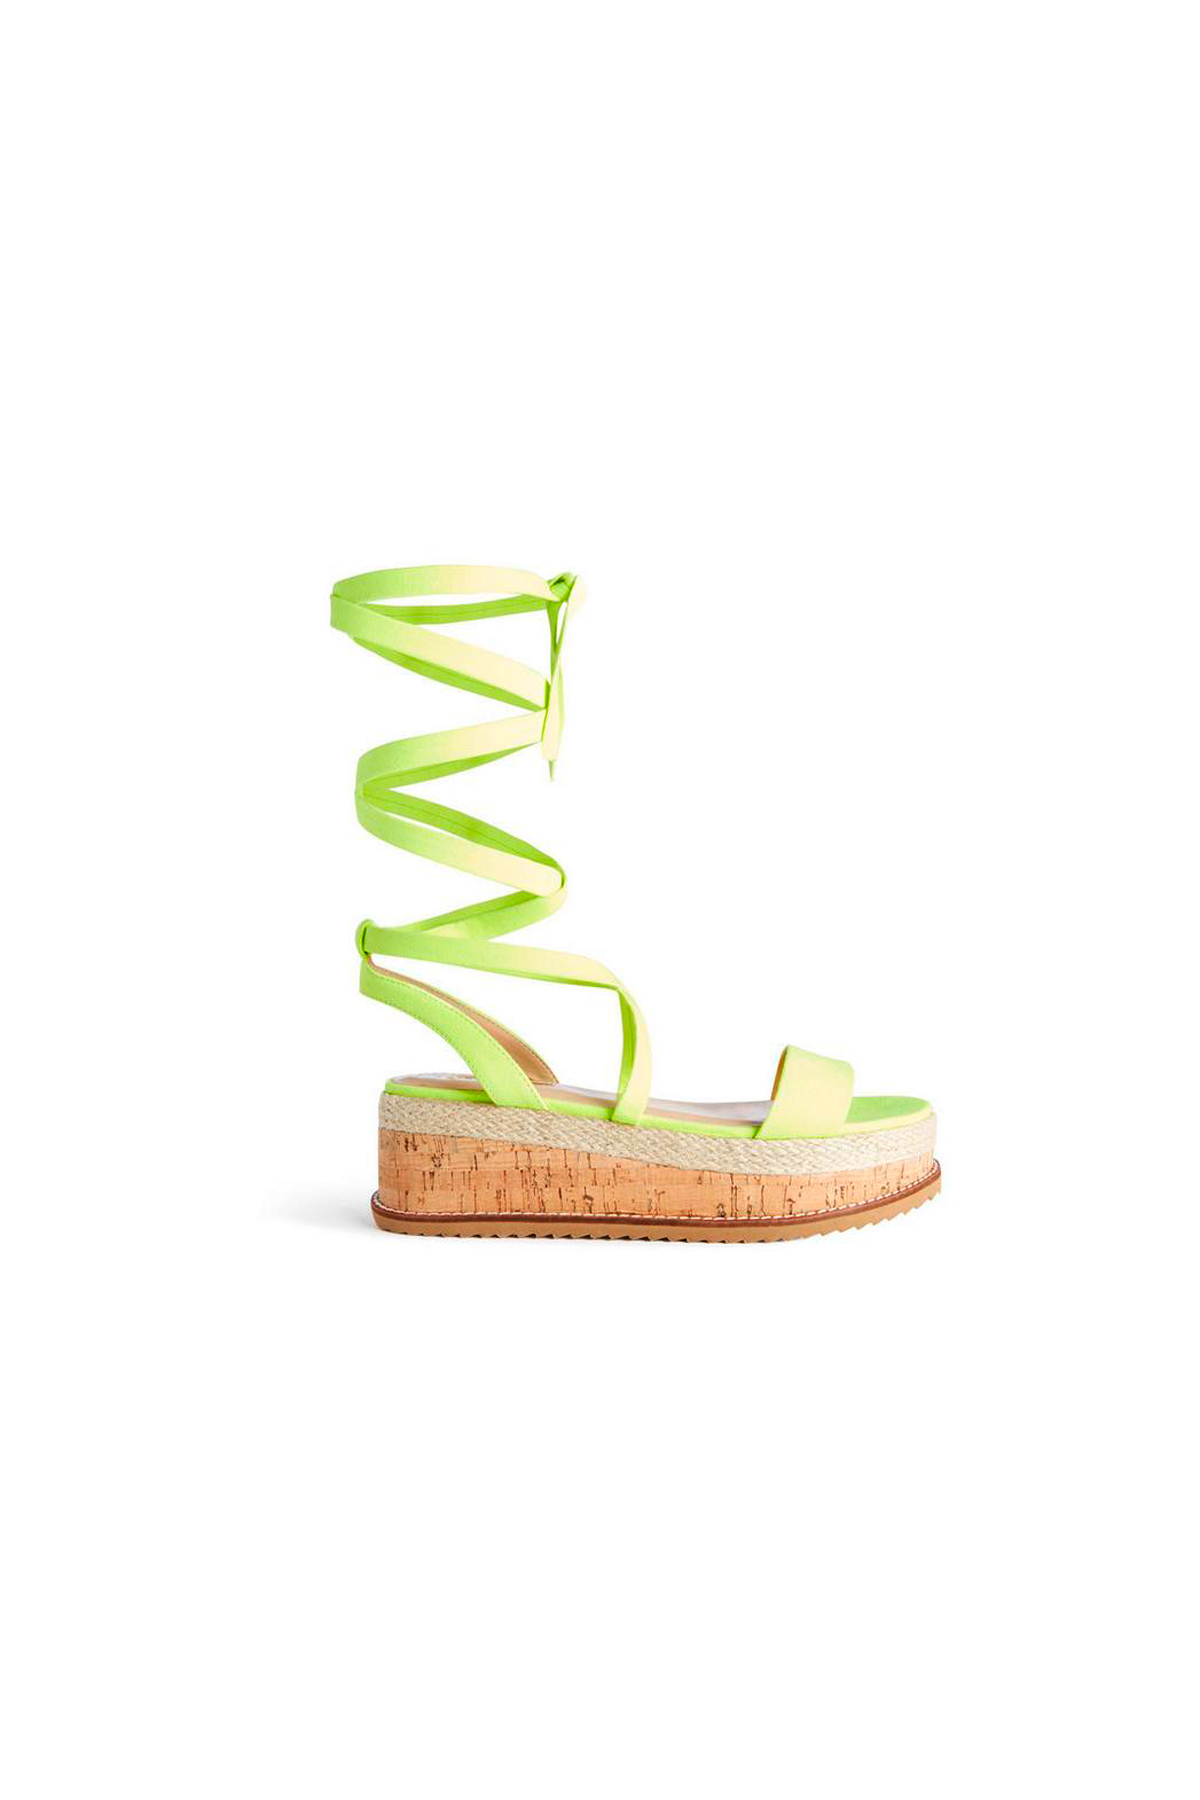 Sandálias-plataforma-atilhos-amarelo-néon,-Primark,-€16